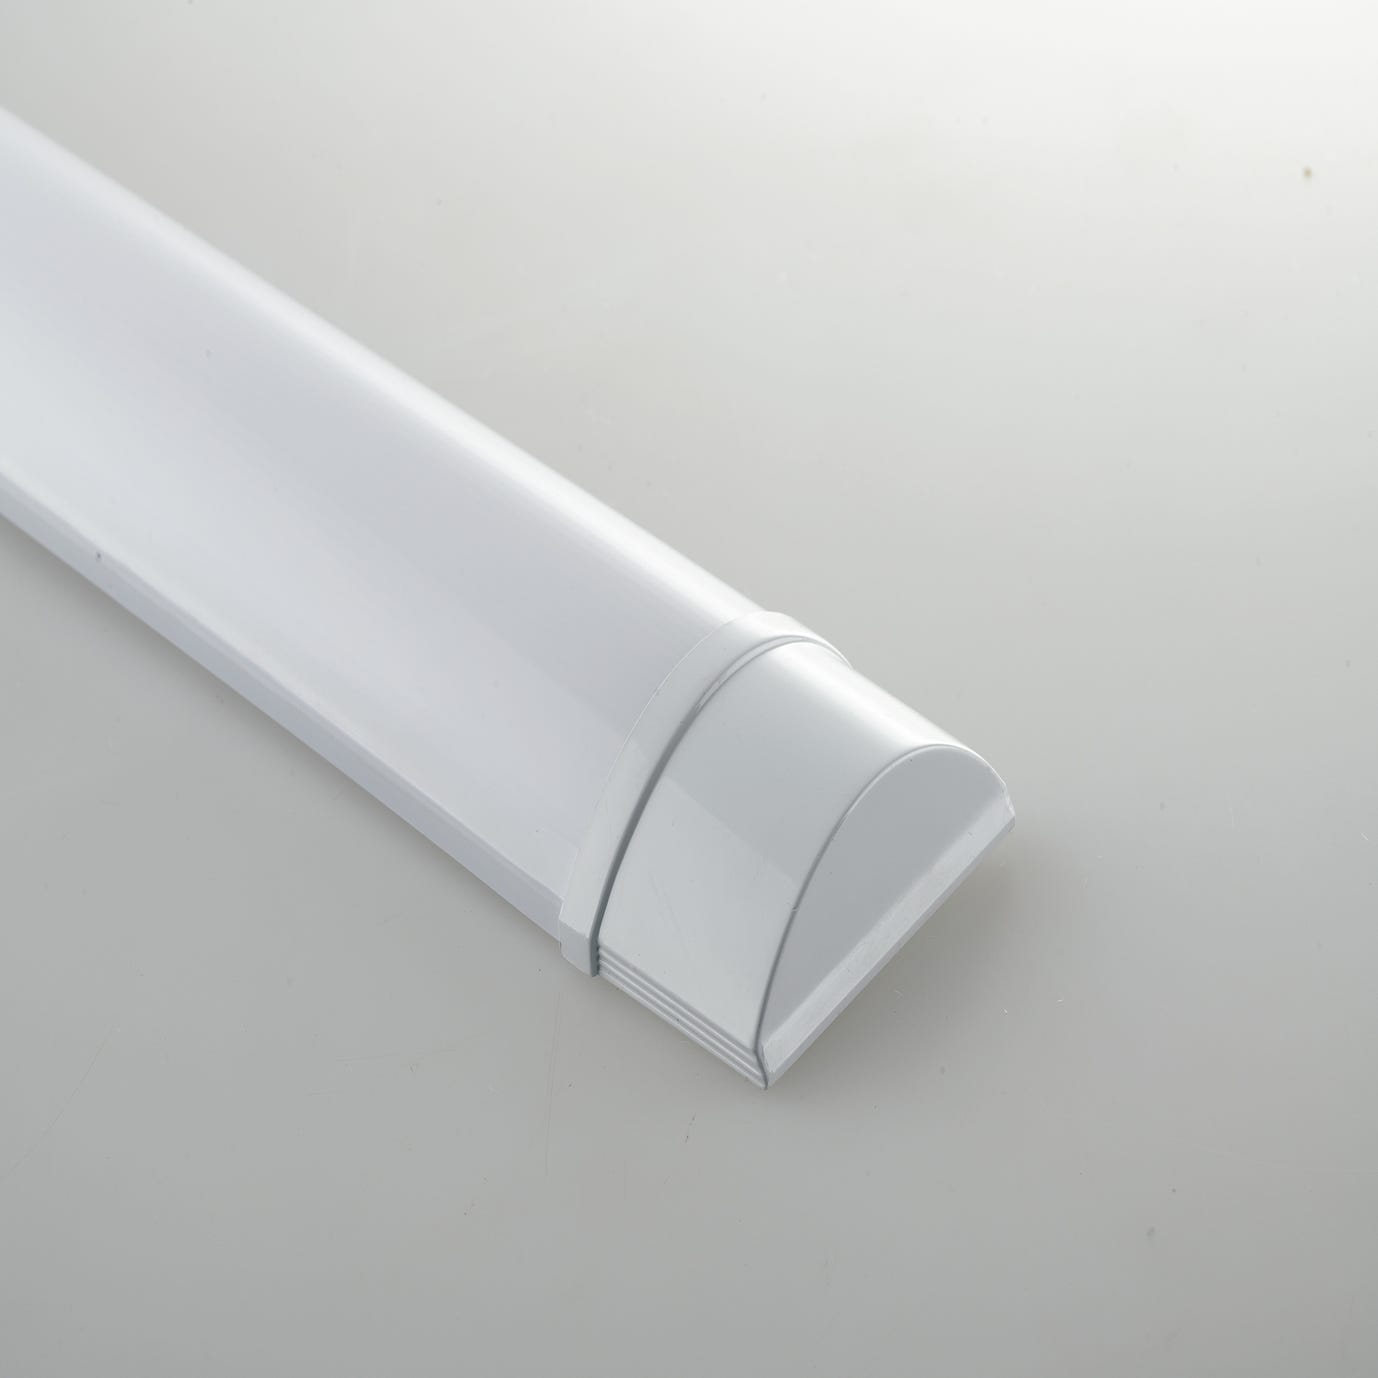 Barra LED BATTEN en policarbonato blanco 18W luz natural 4000K 60 cm.